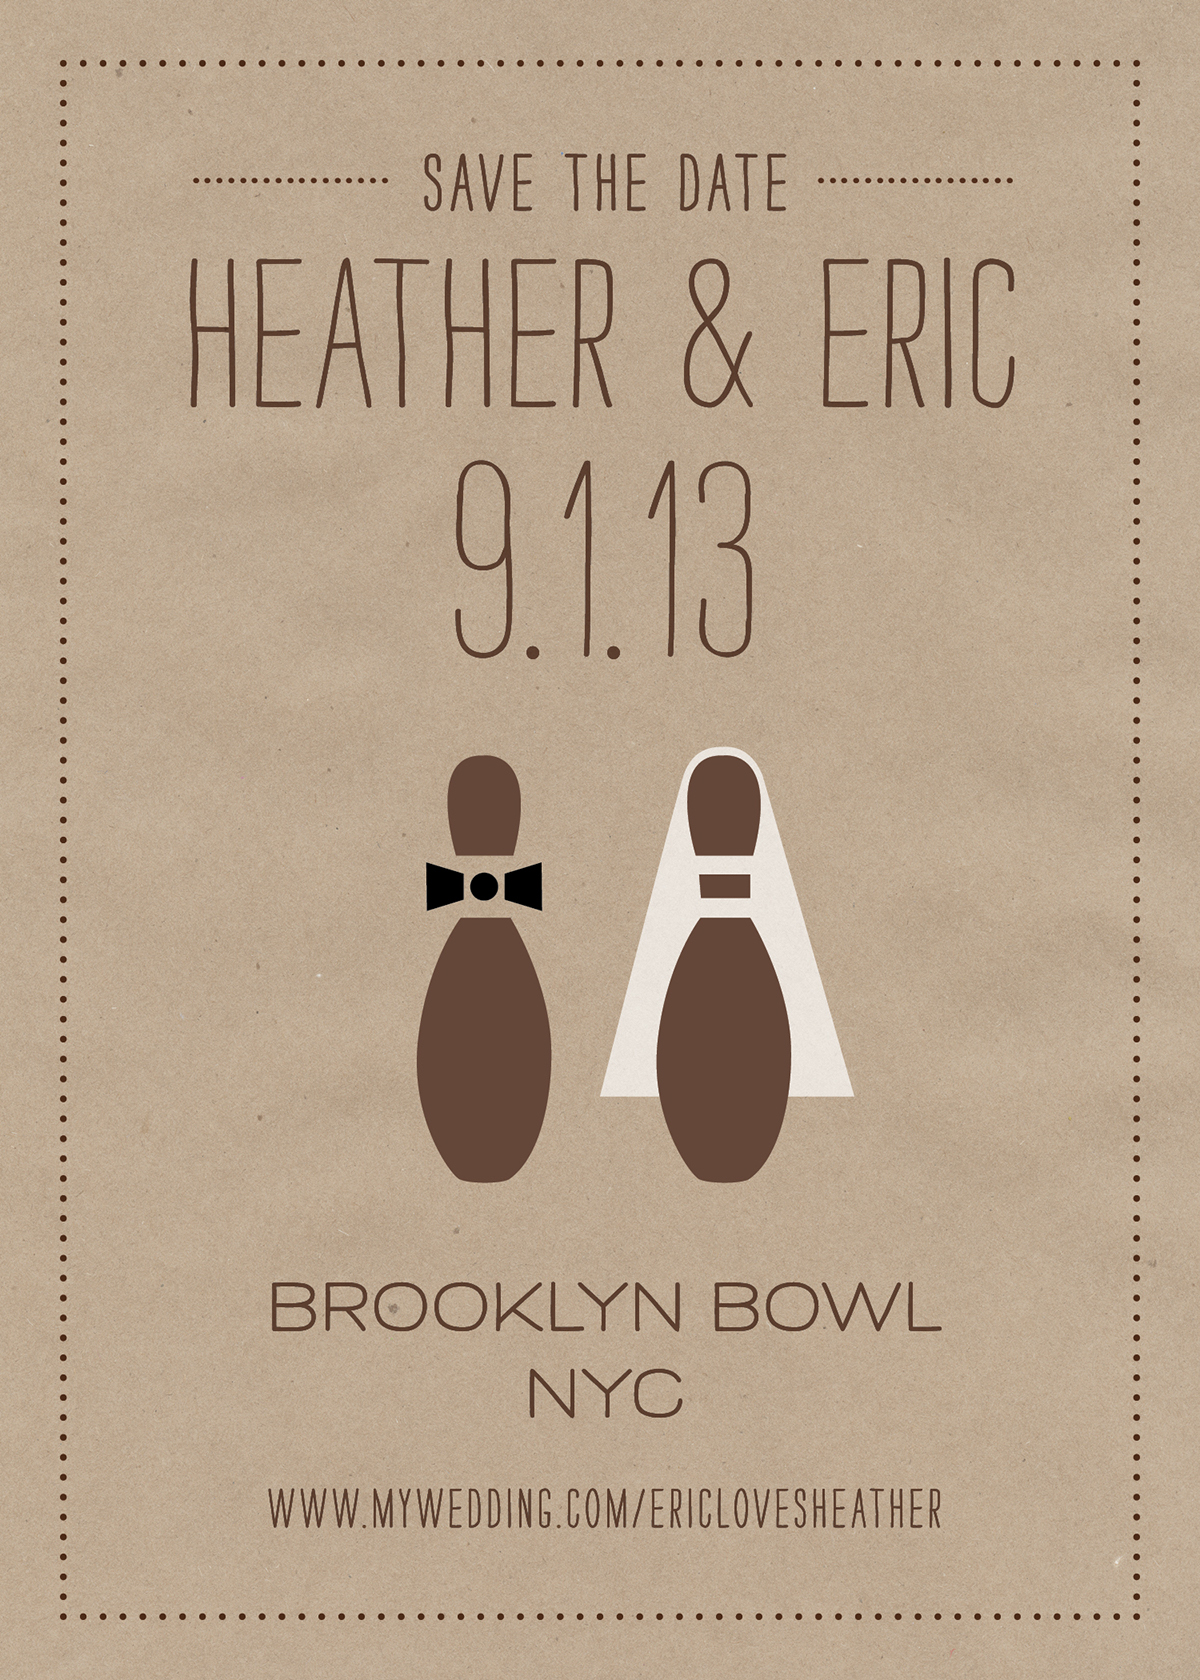 Adobe Portfolio wedding save the date bowling kraft paper Invitation brooklyn bowl wedding Brooklyn Wedding Brooklyn Brooklyn Bowl posters napkins bowling pins bowling wedding